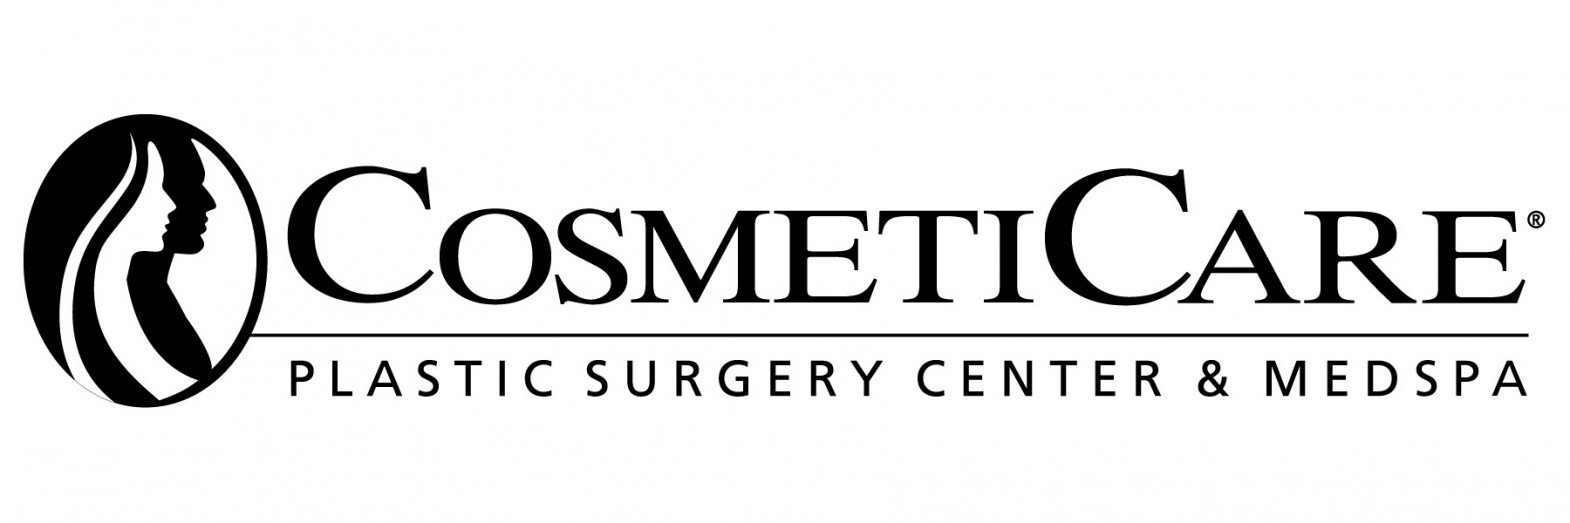 Plastic surgery Logos